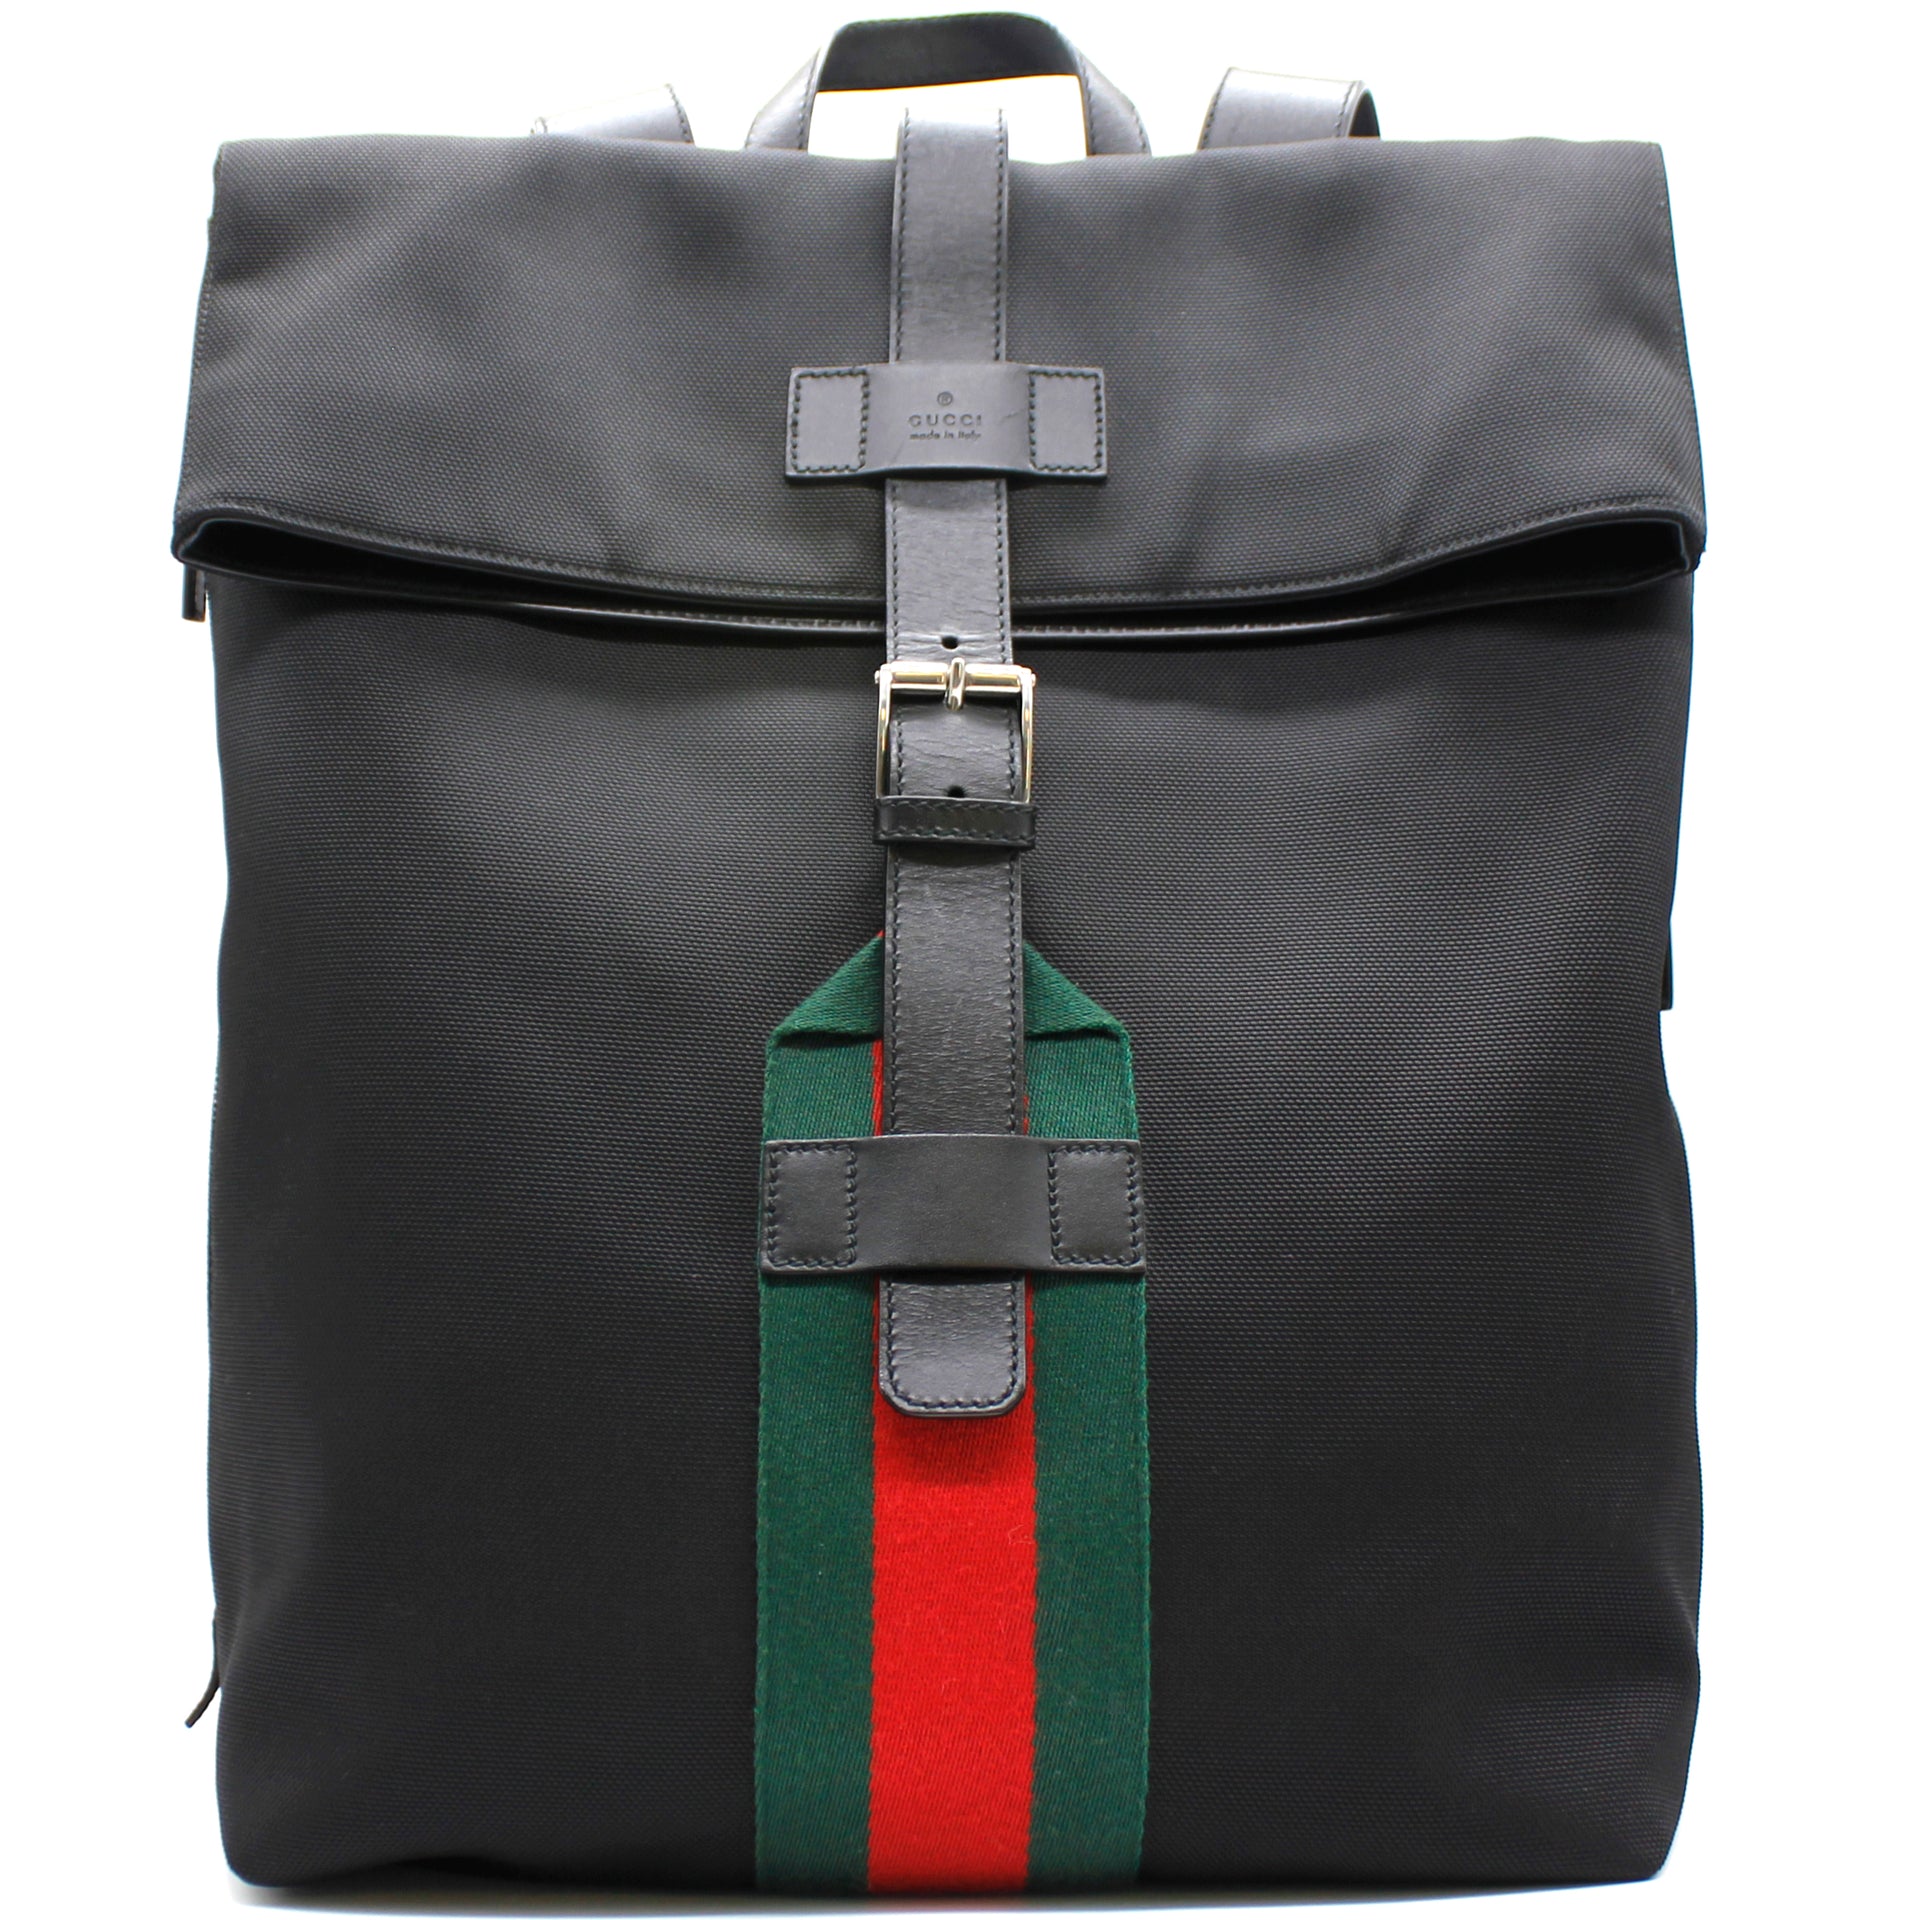 Gucci Web And Kingsnake Print Leather Backpack In Black